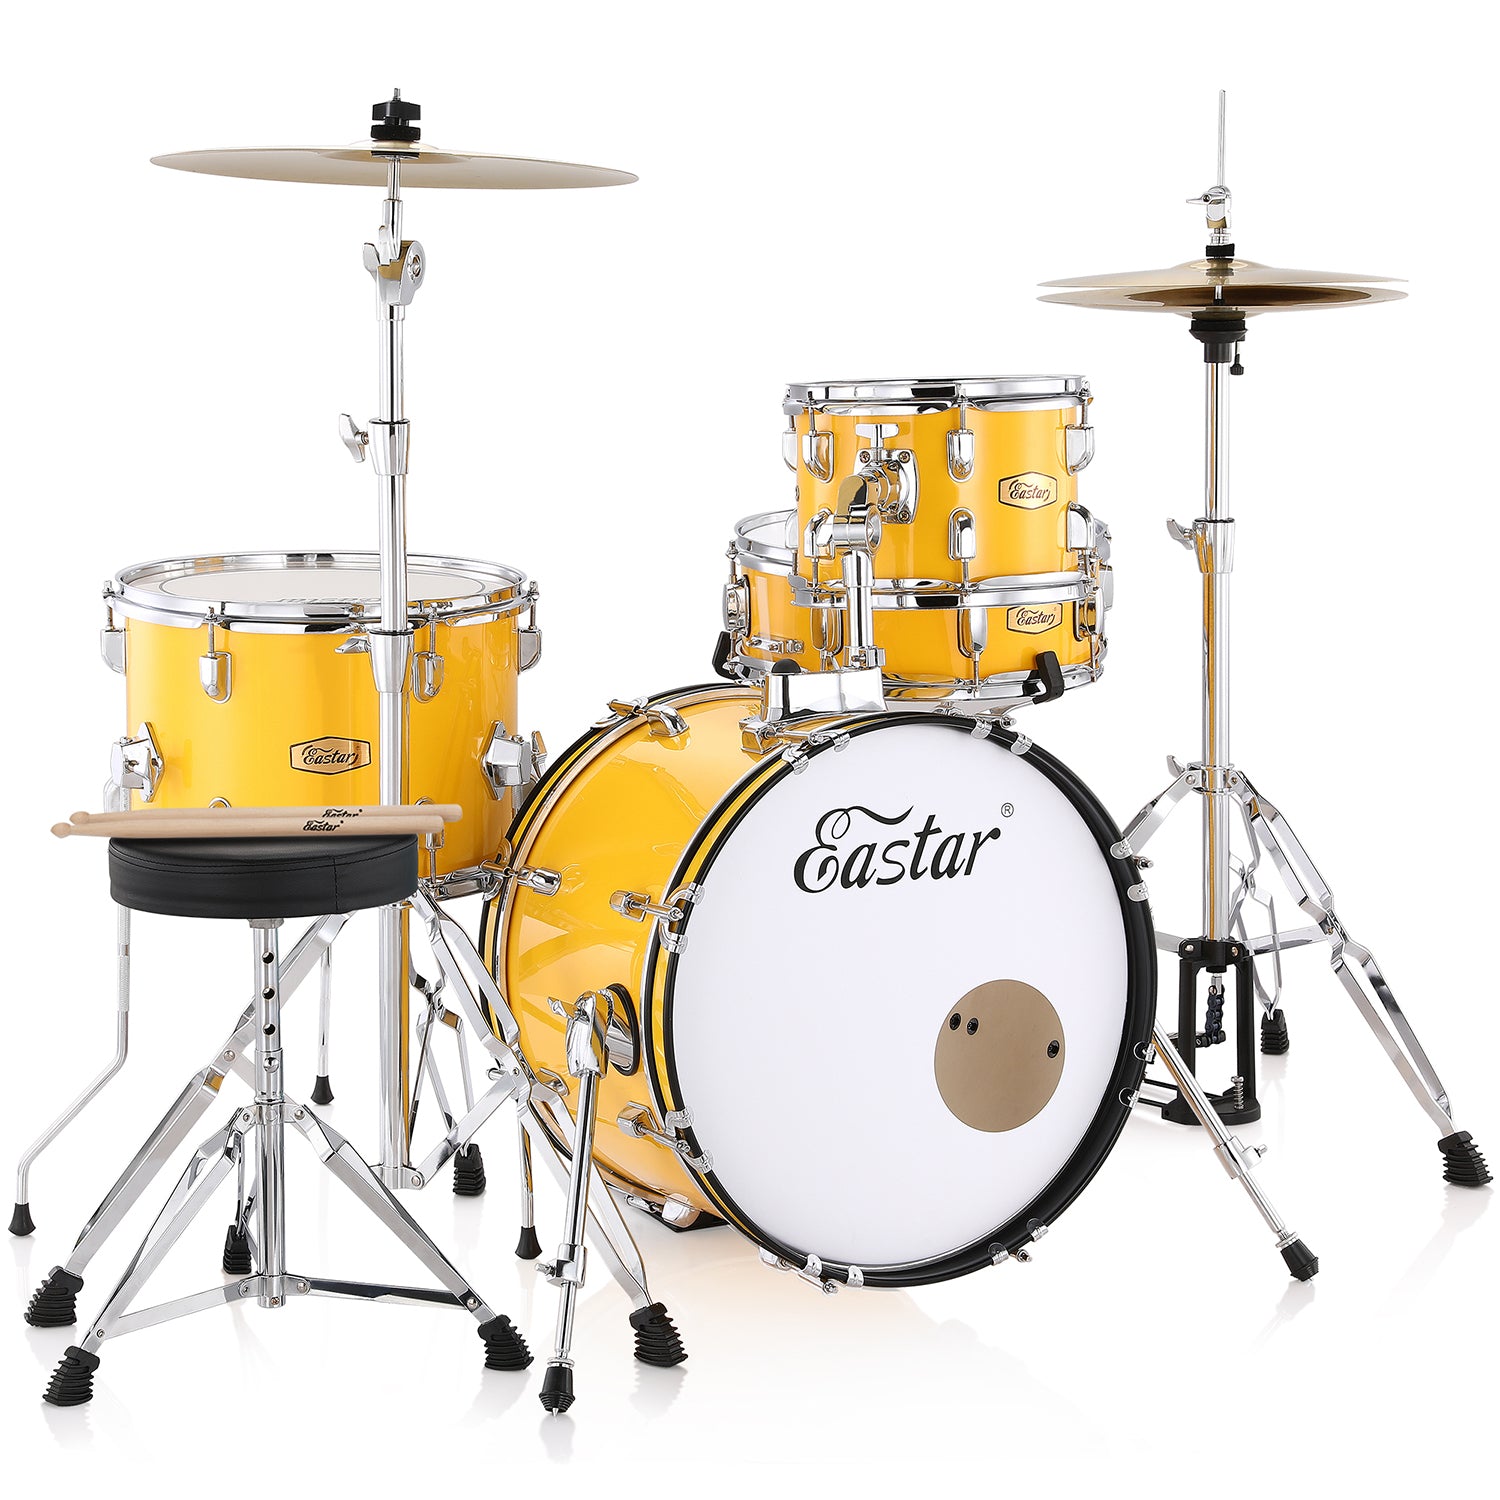 

Eastar EDS-540Bu 18 inch Full-Size 4-Drum Set, Yellow